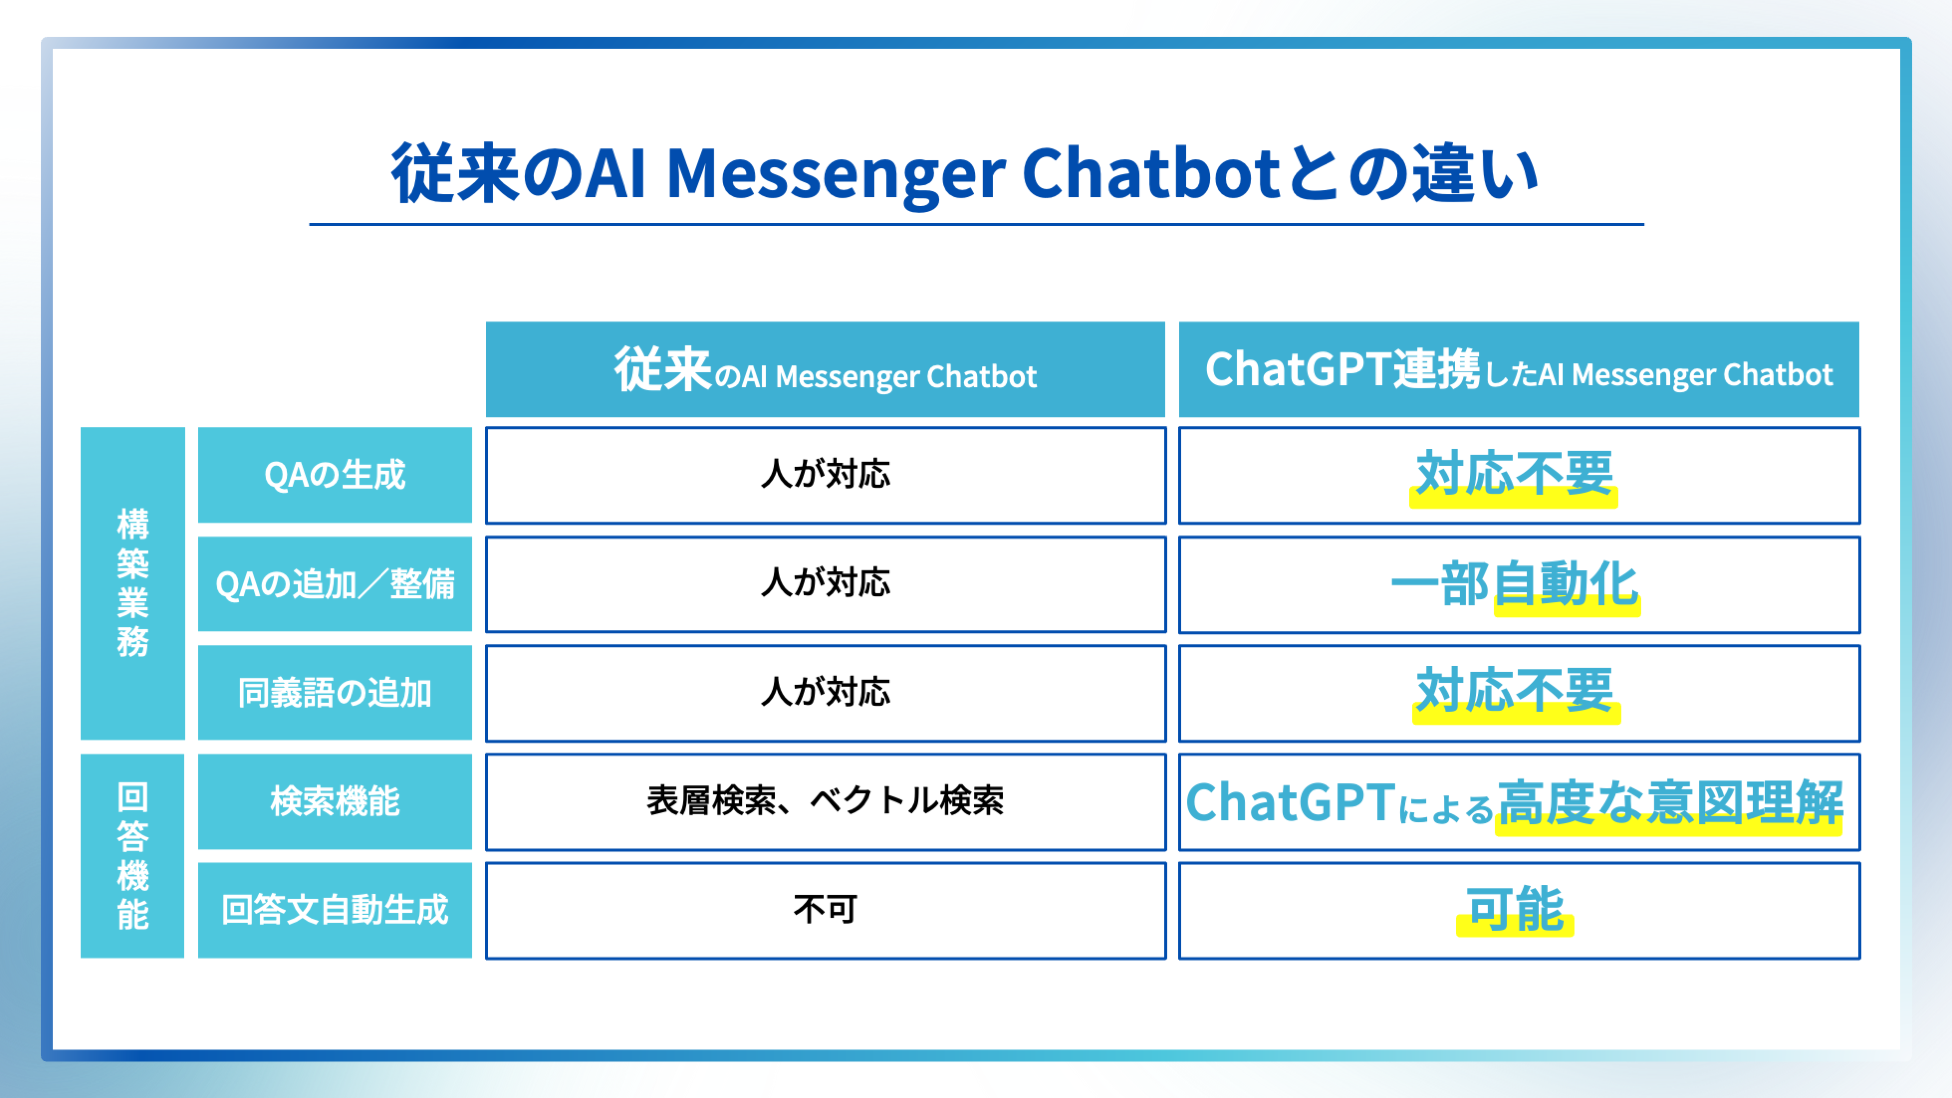 AI ShiftAuAI Messenger ChatbotvChatGPTAgA啝Abvf[gI]A\zE^pH̍팸ѐ̌I